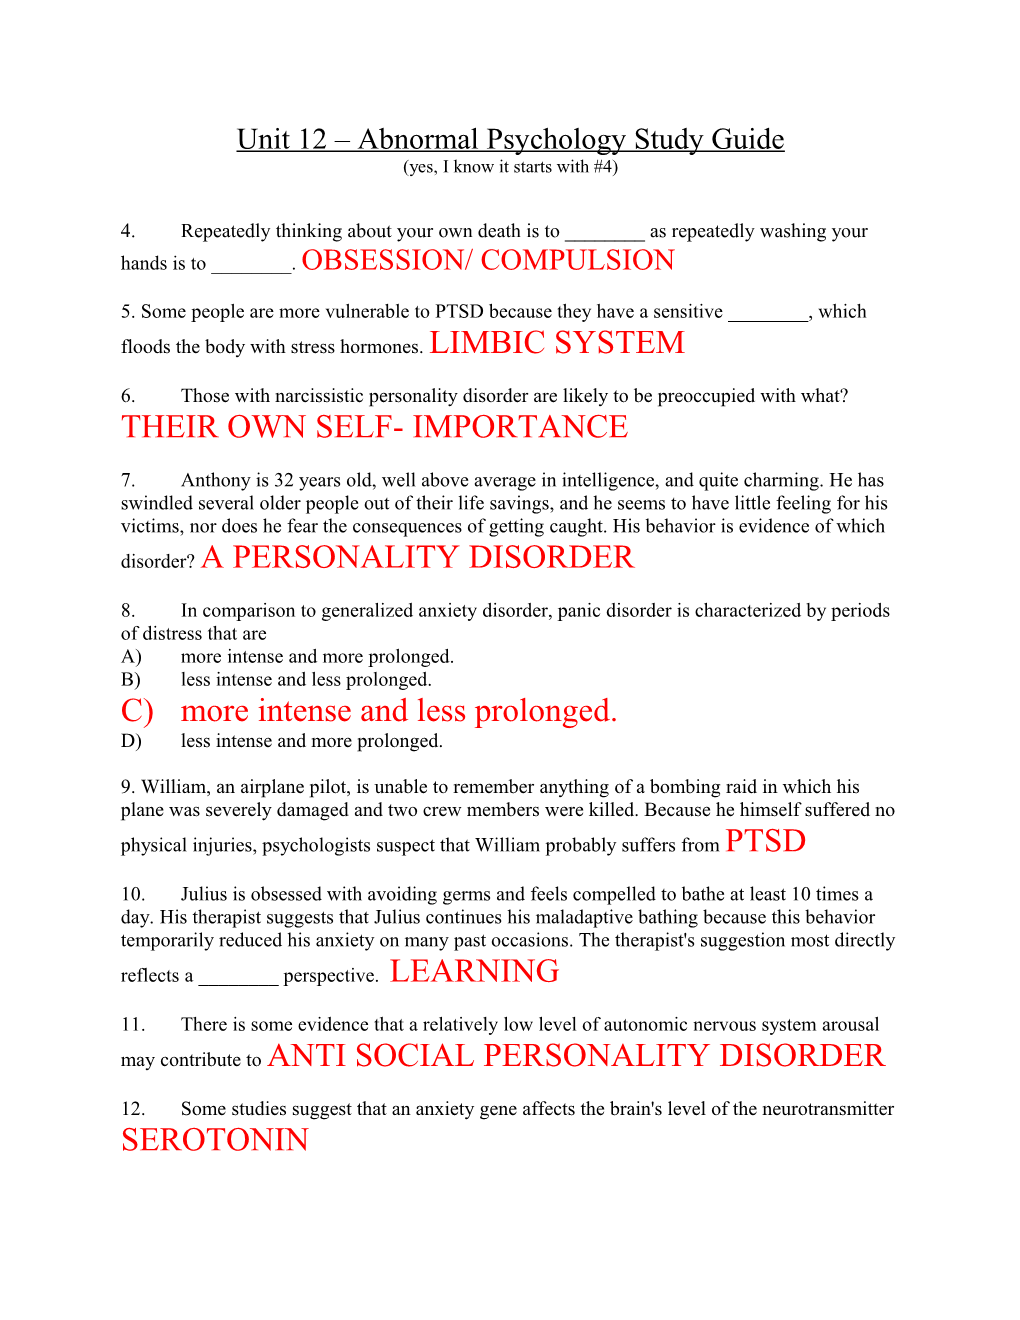 Unit 12 Abnormal Psychology Study Guide